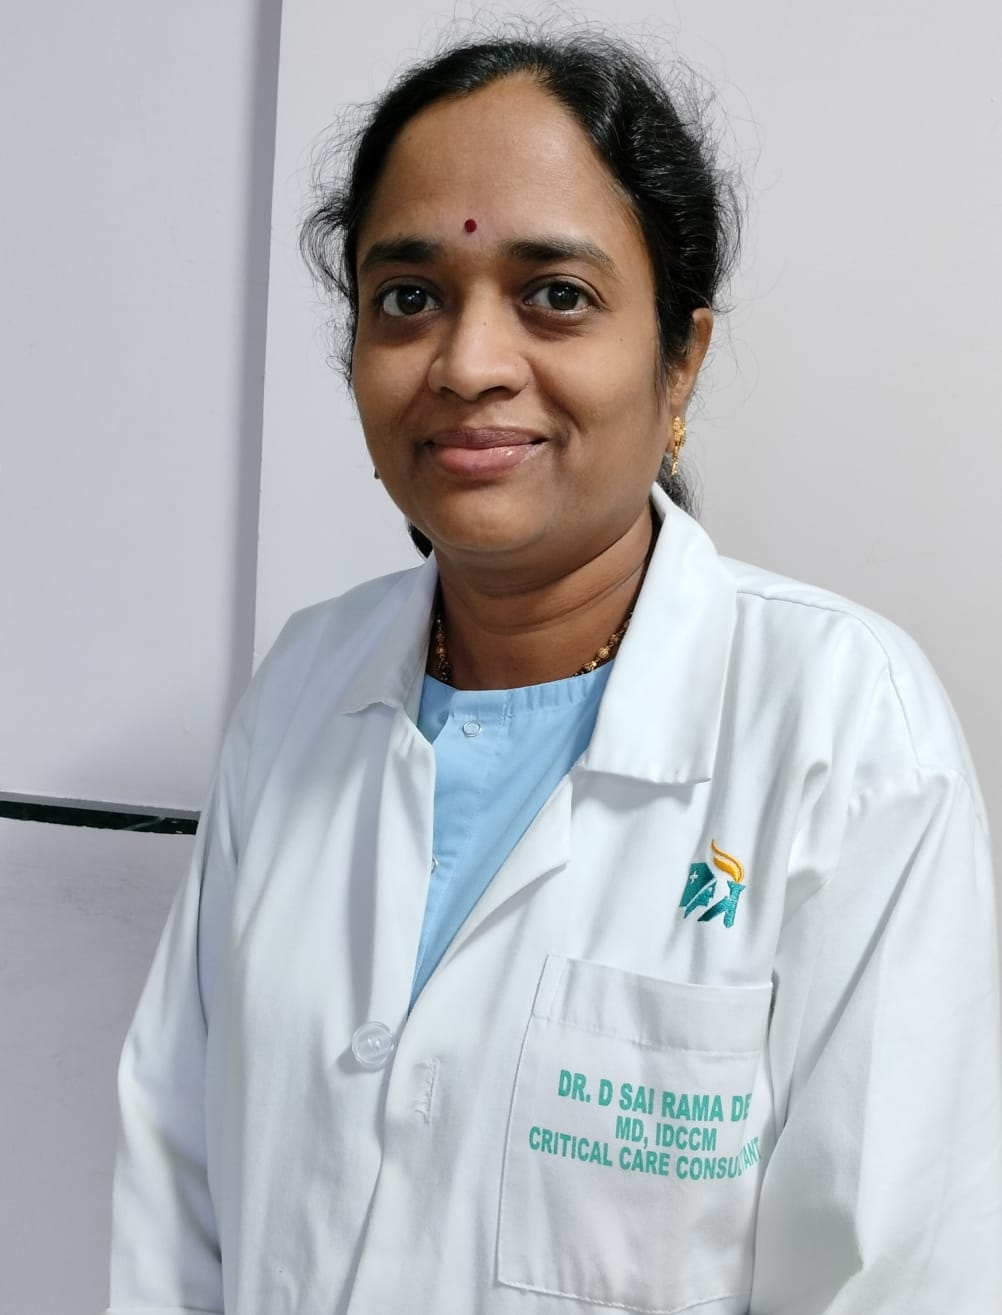 Dr. D SAI RAMA DEVI
 Profile Image